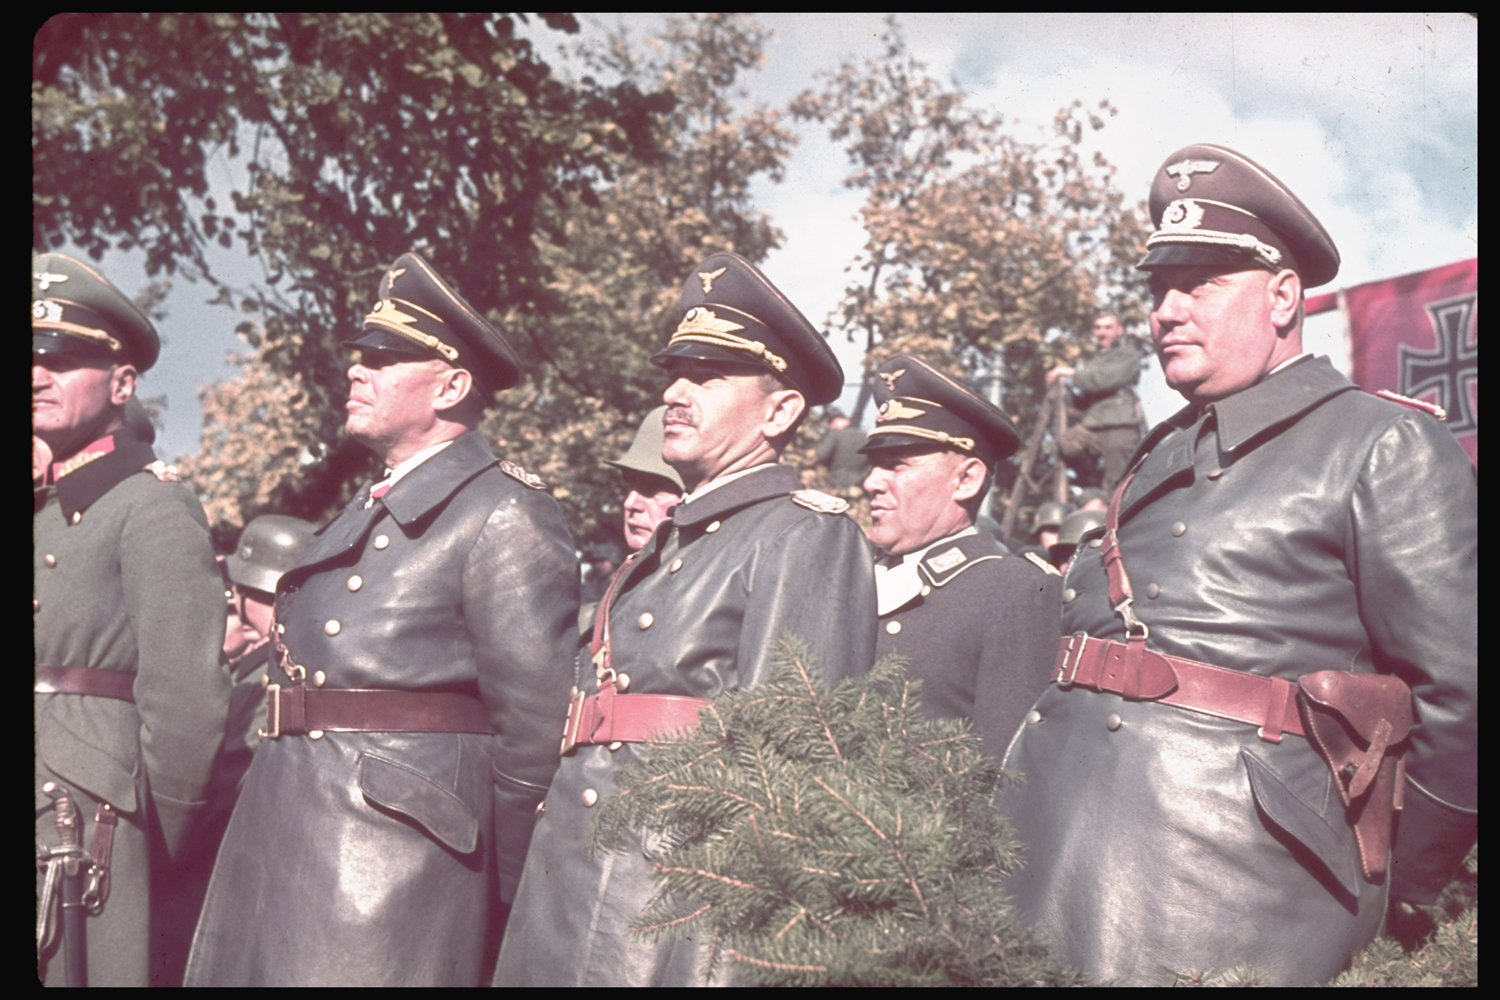 Right to left, front row: Adjutant Wilhelm Brueckner, Luftwaffe fighter ace Adolf Galland, Gen. Albert Kesselring and Gen. Johannes Blaskowitz view the victory parade in Warsaw after the German invasion of Poland, 1939.